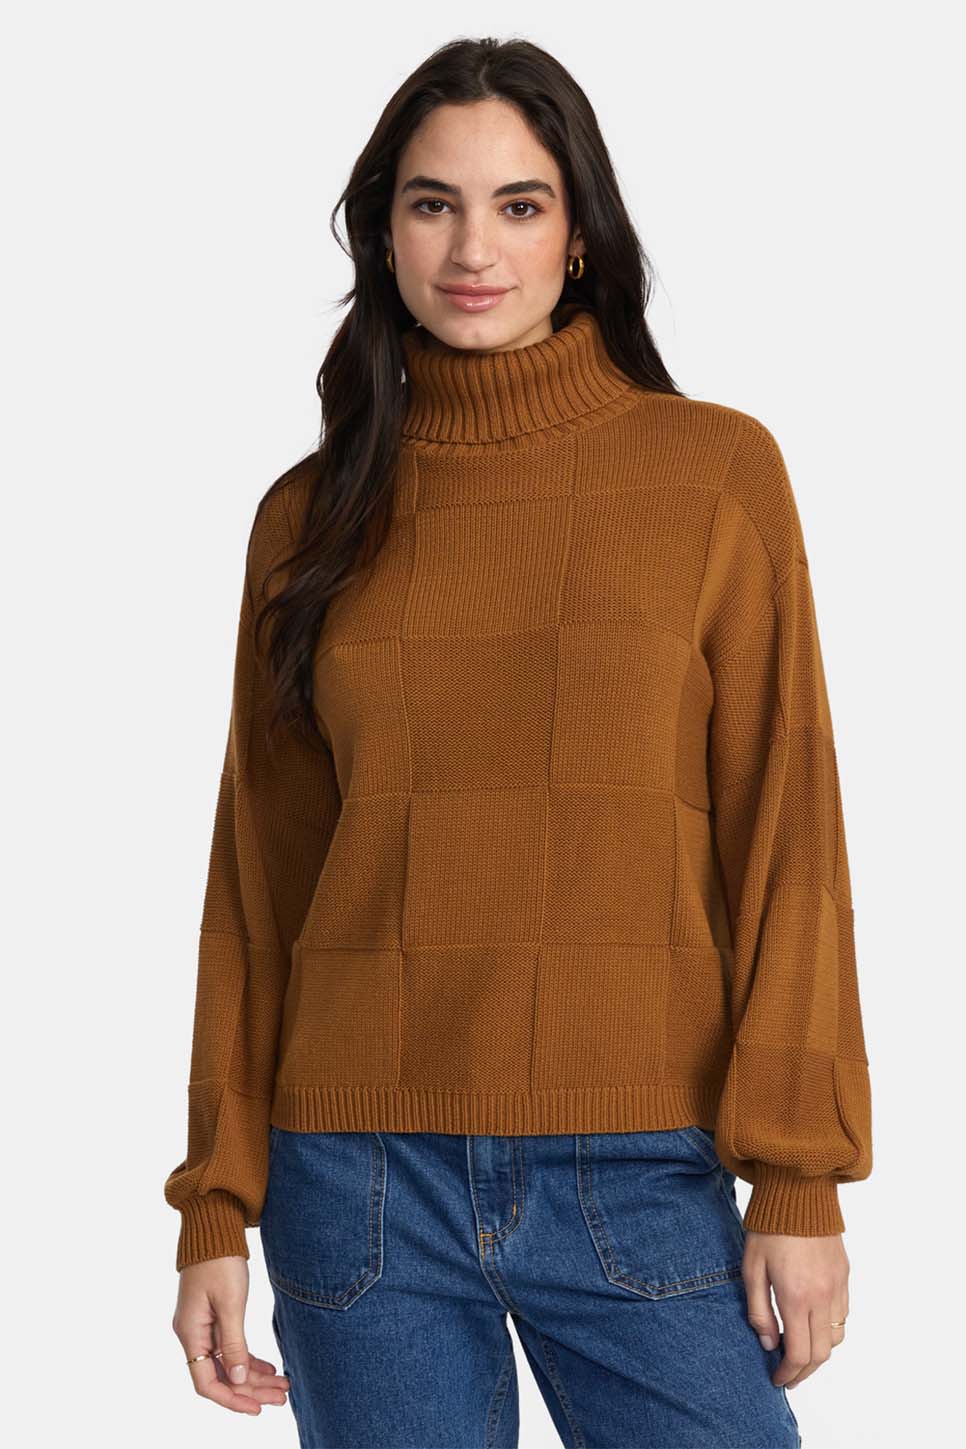 RVCA - Vineyard Sweater - Workwear Brown - Front